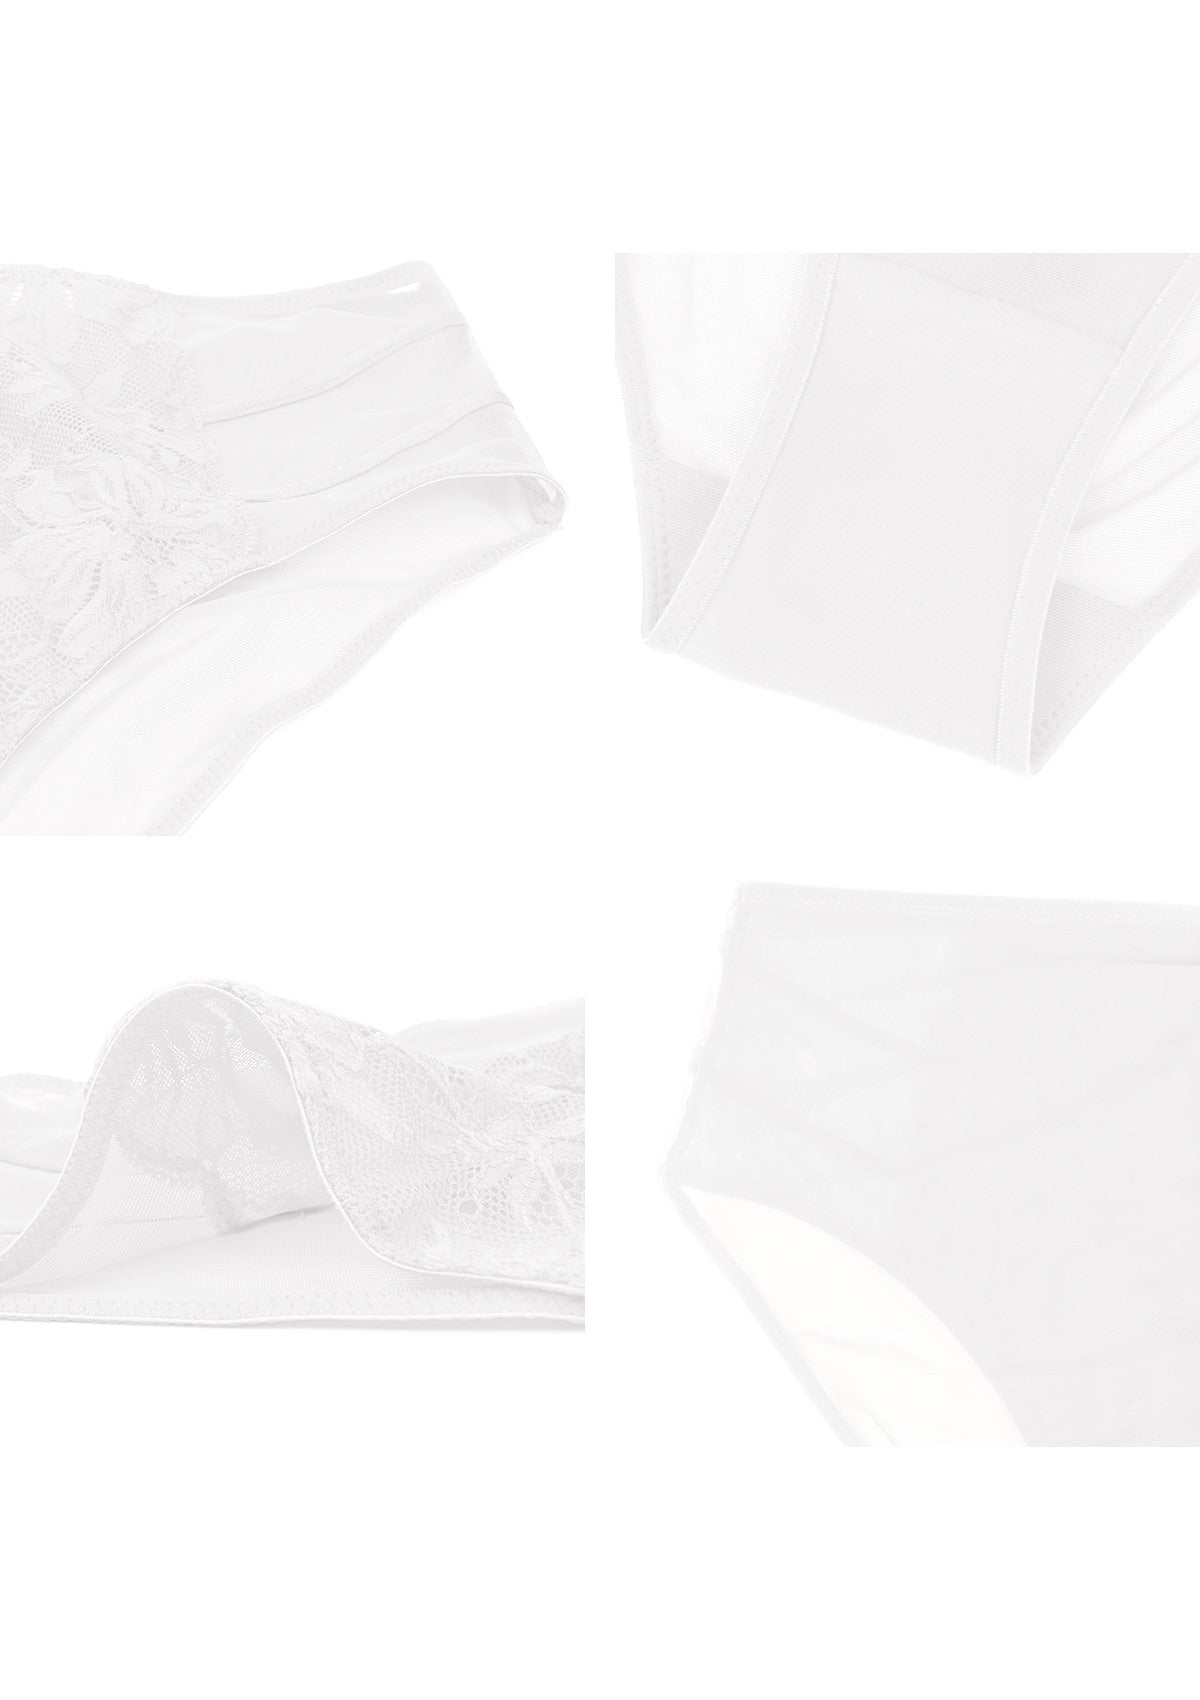 HSIA Mid-Rise Elegant Feminine Sheer Lace Mesh Comfortable Underwear. - M / High-Rise Brief / White